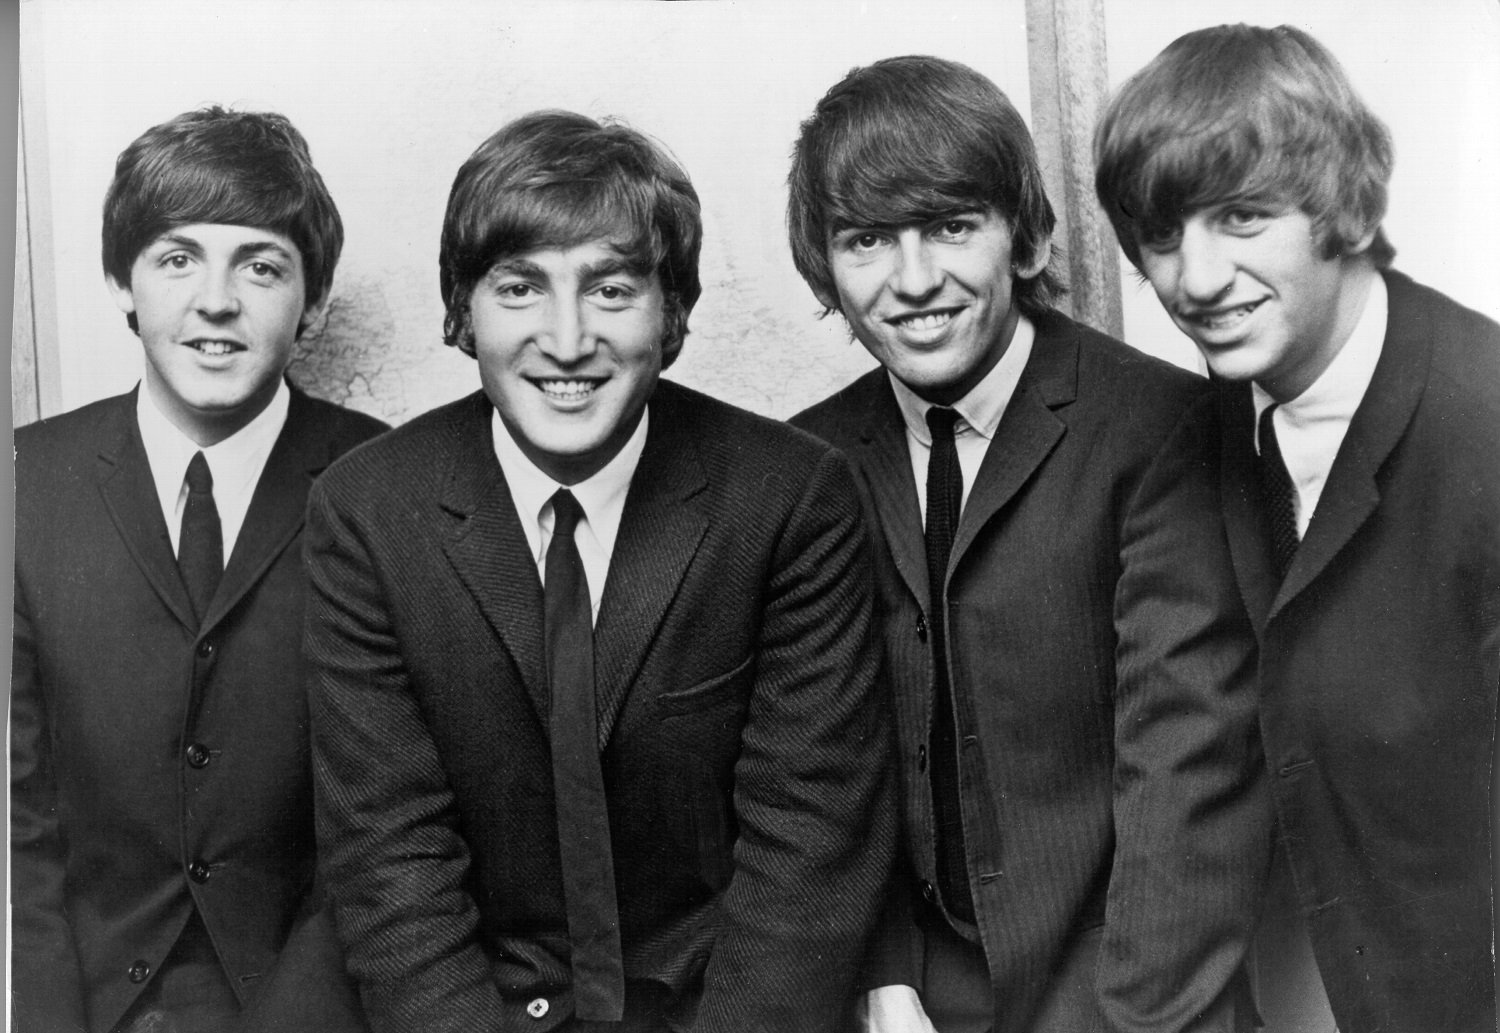 Paul McCartney, John Lennon, George Harrison, and Ringo Starr of The Beatles